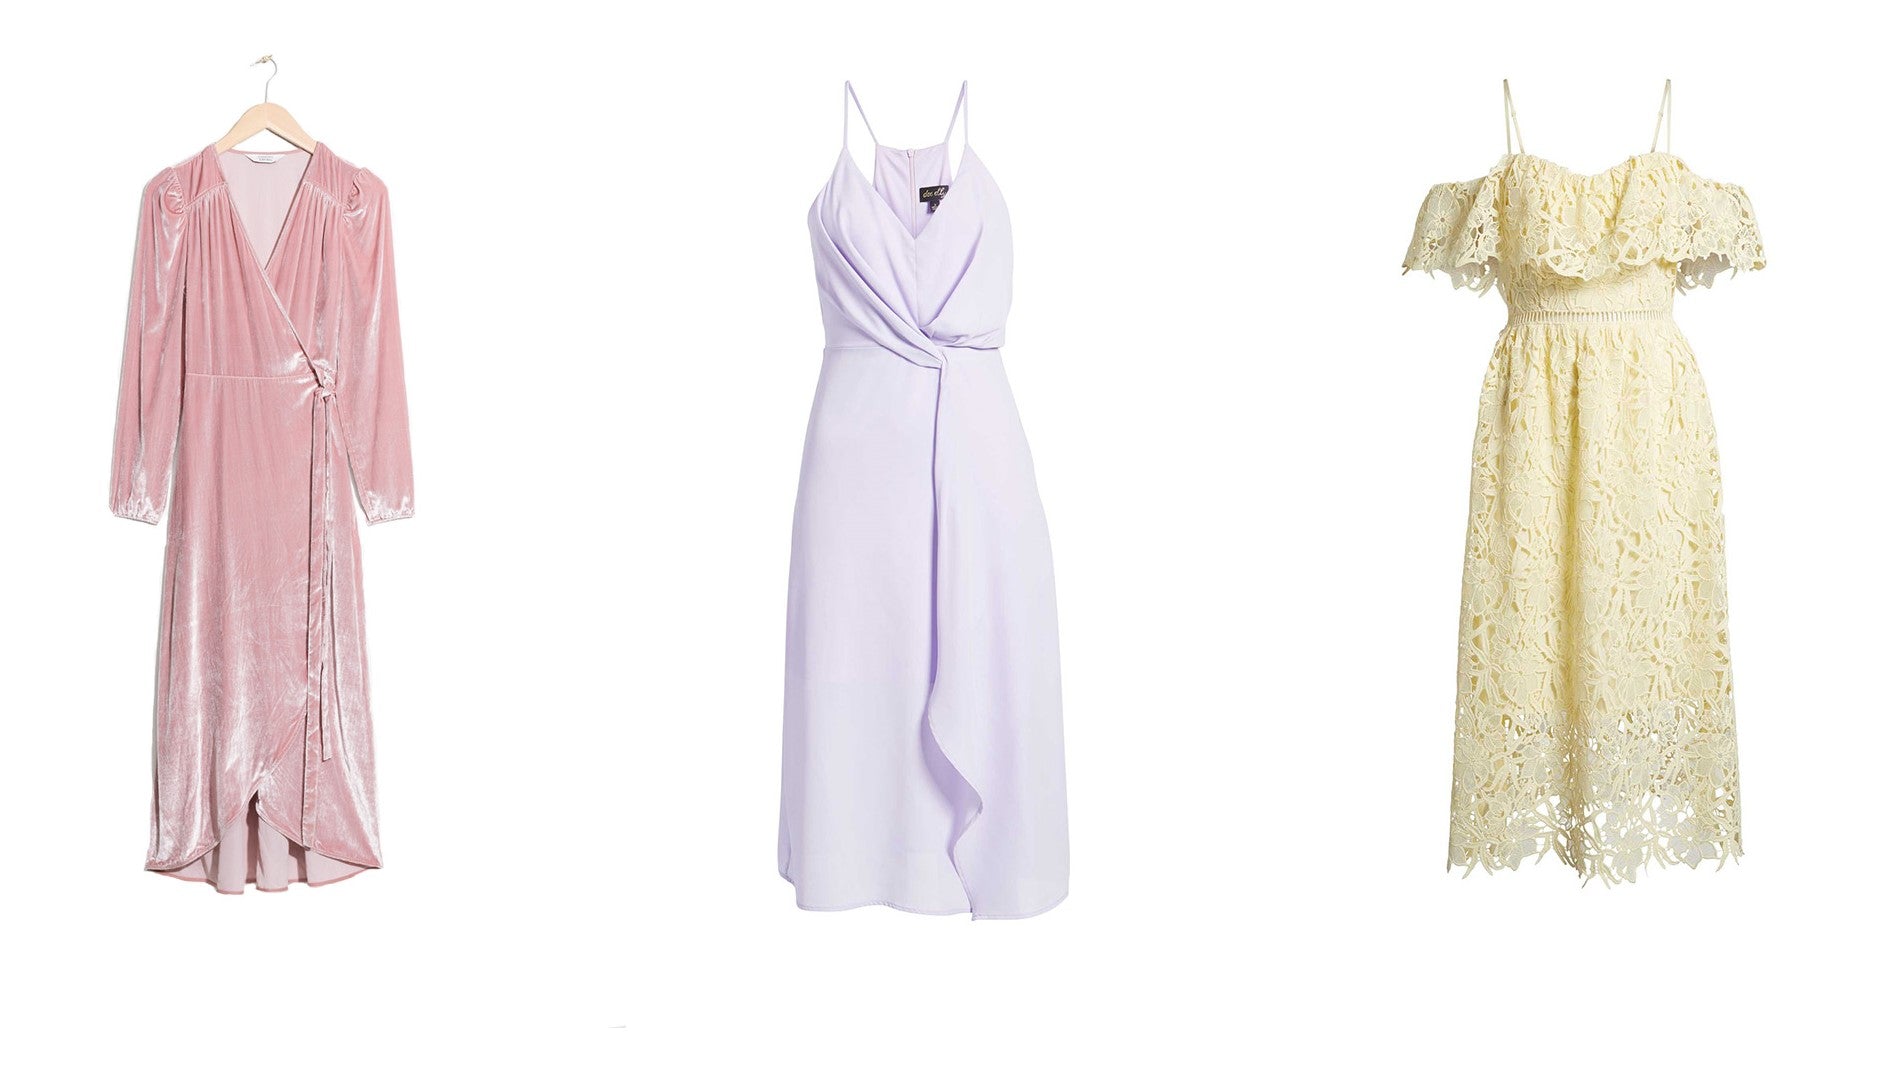 Top 5 Dresses for Easter/Spring.